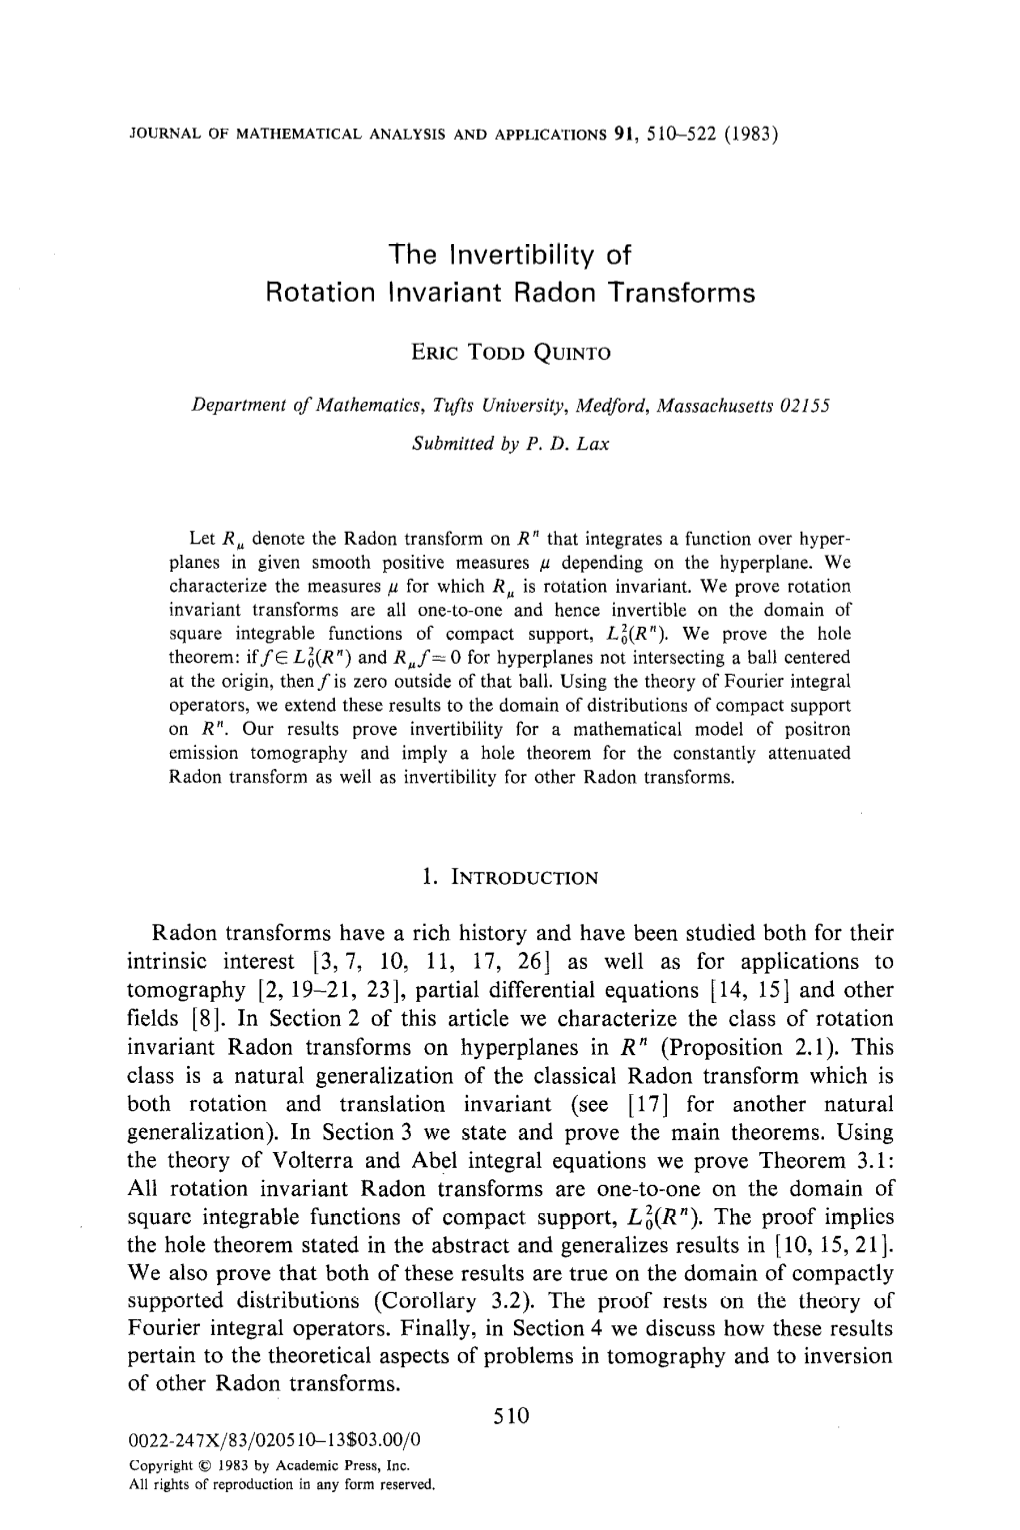 The Lnvertibility of Rotation Invariant Radon Transforms